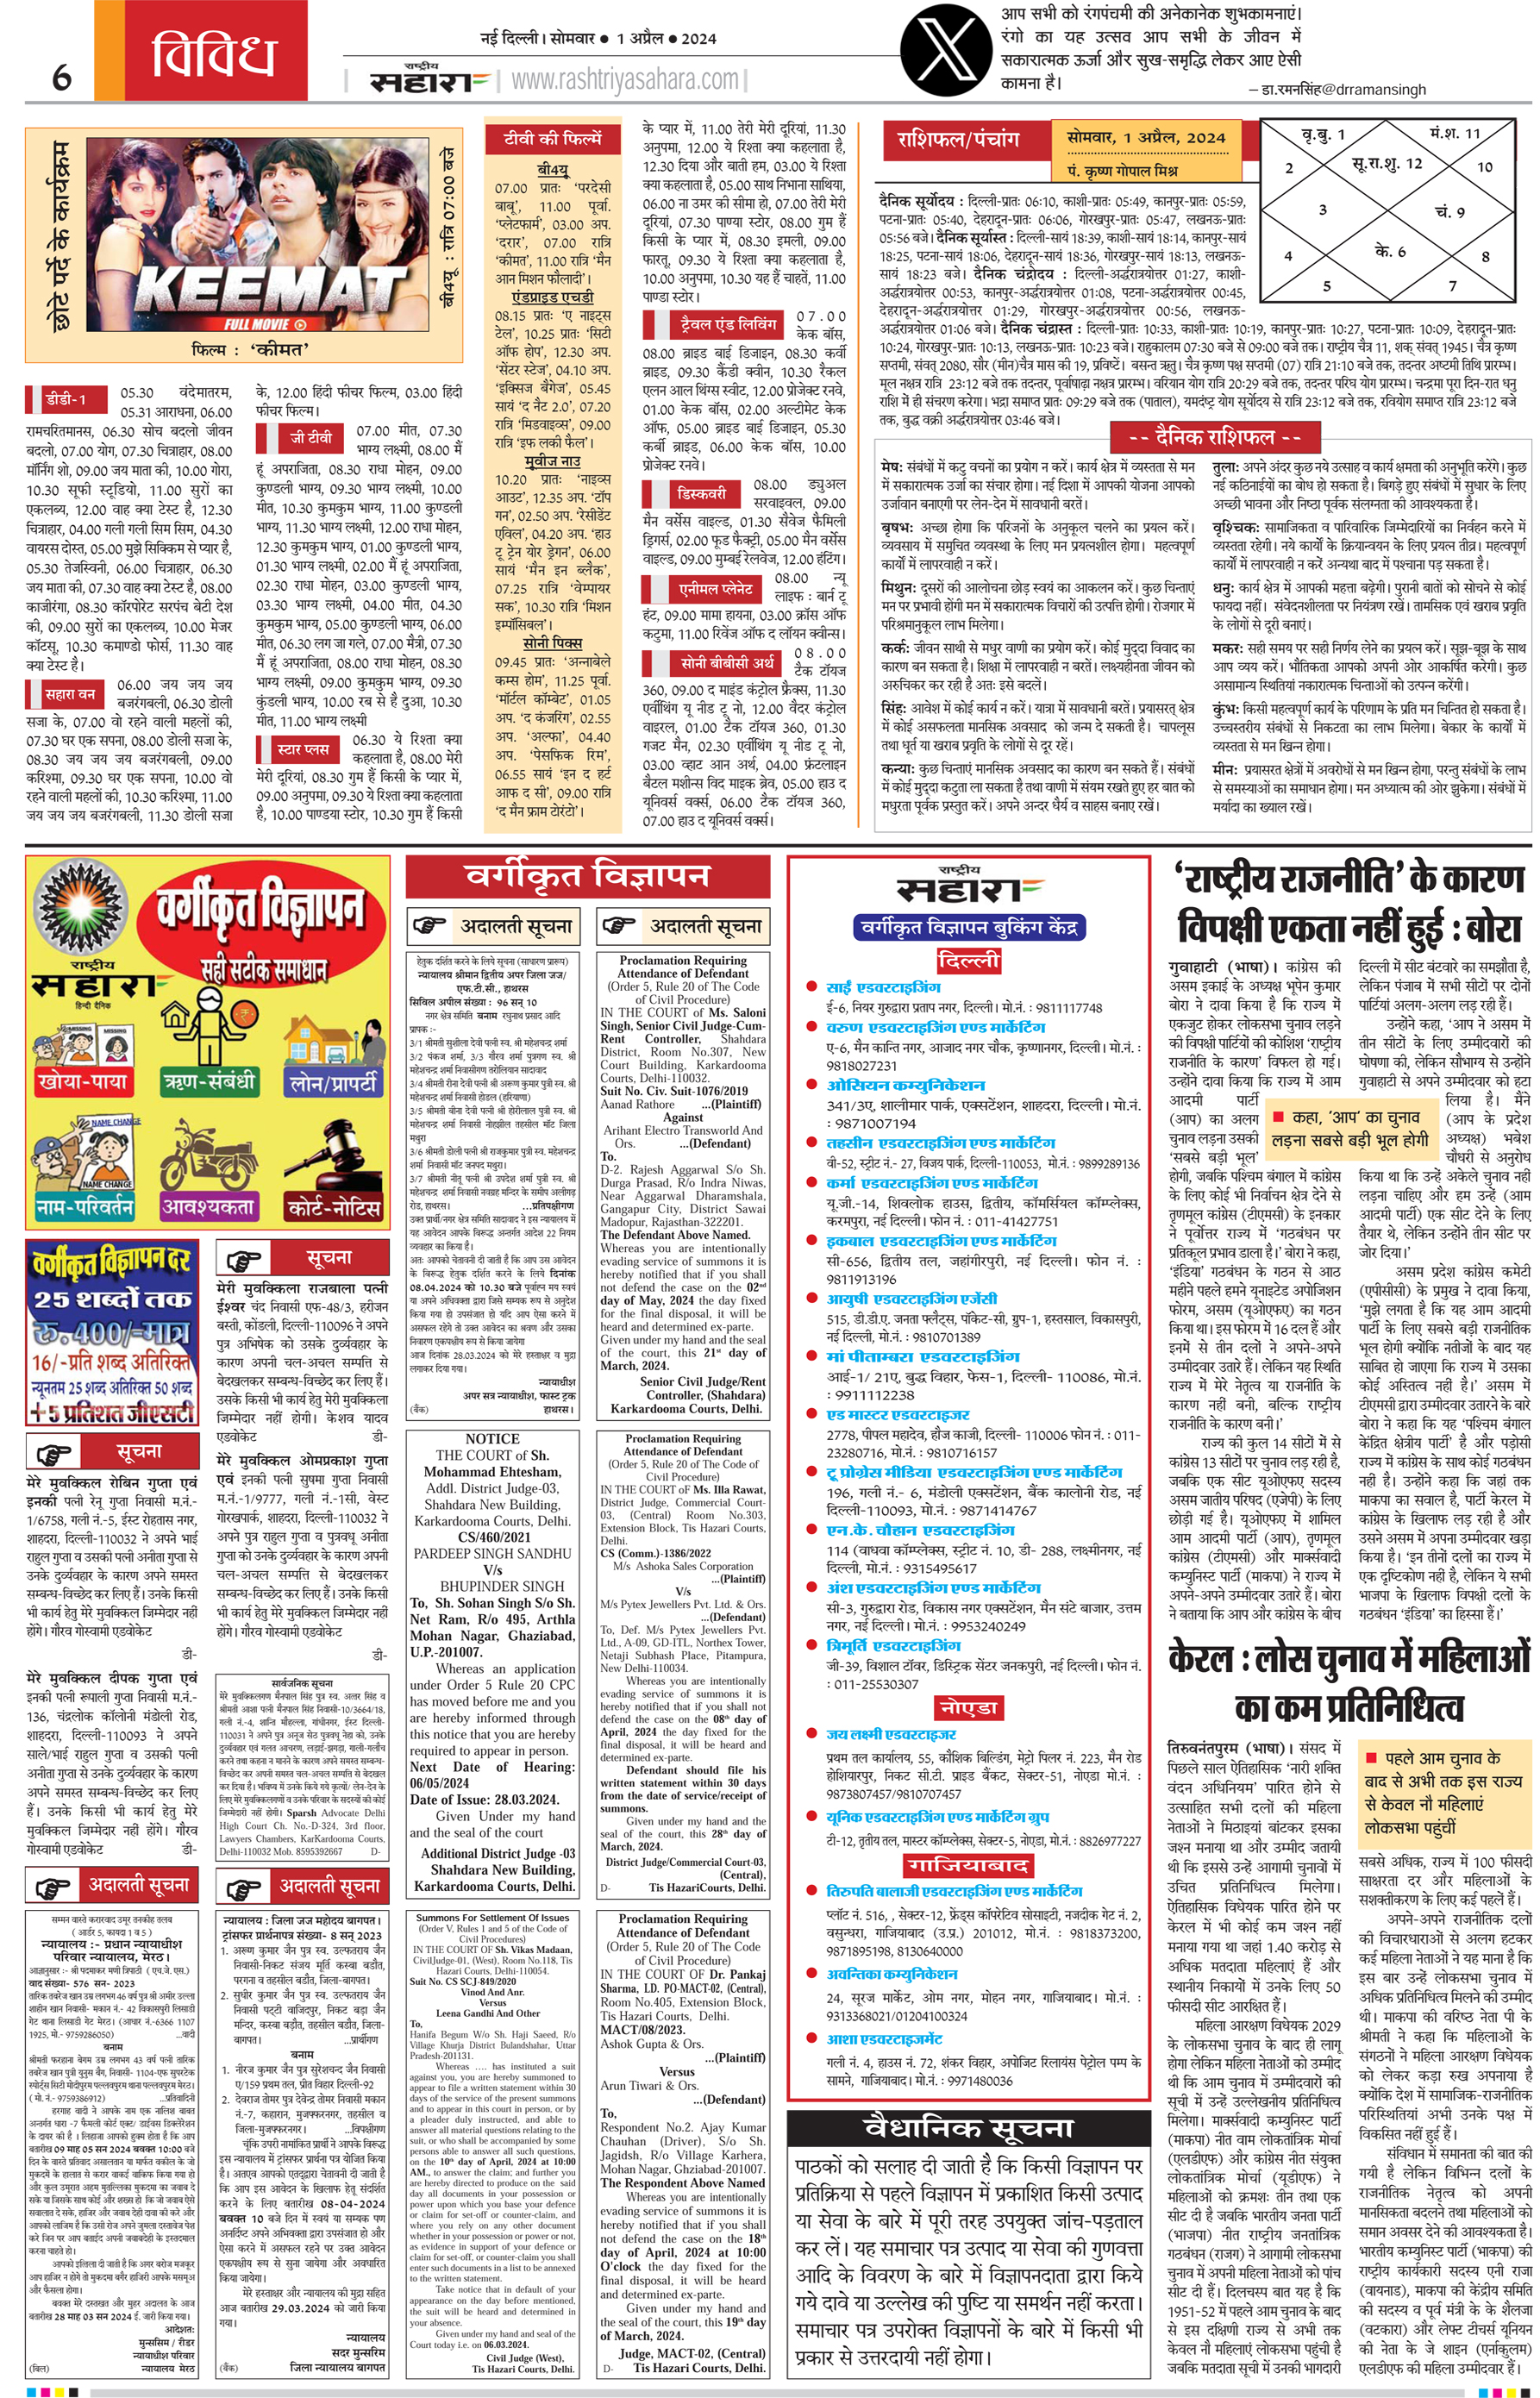 Court Notice Ad in Navbharat Times